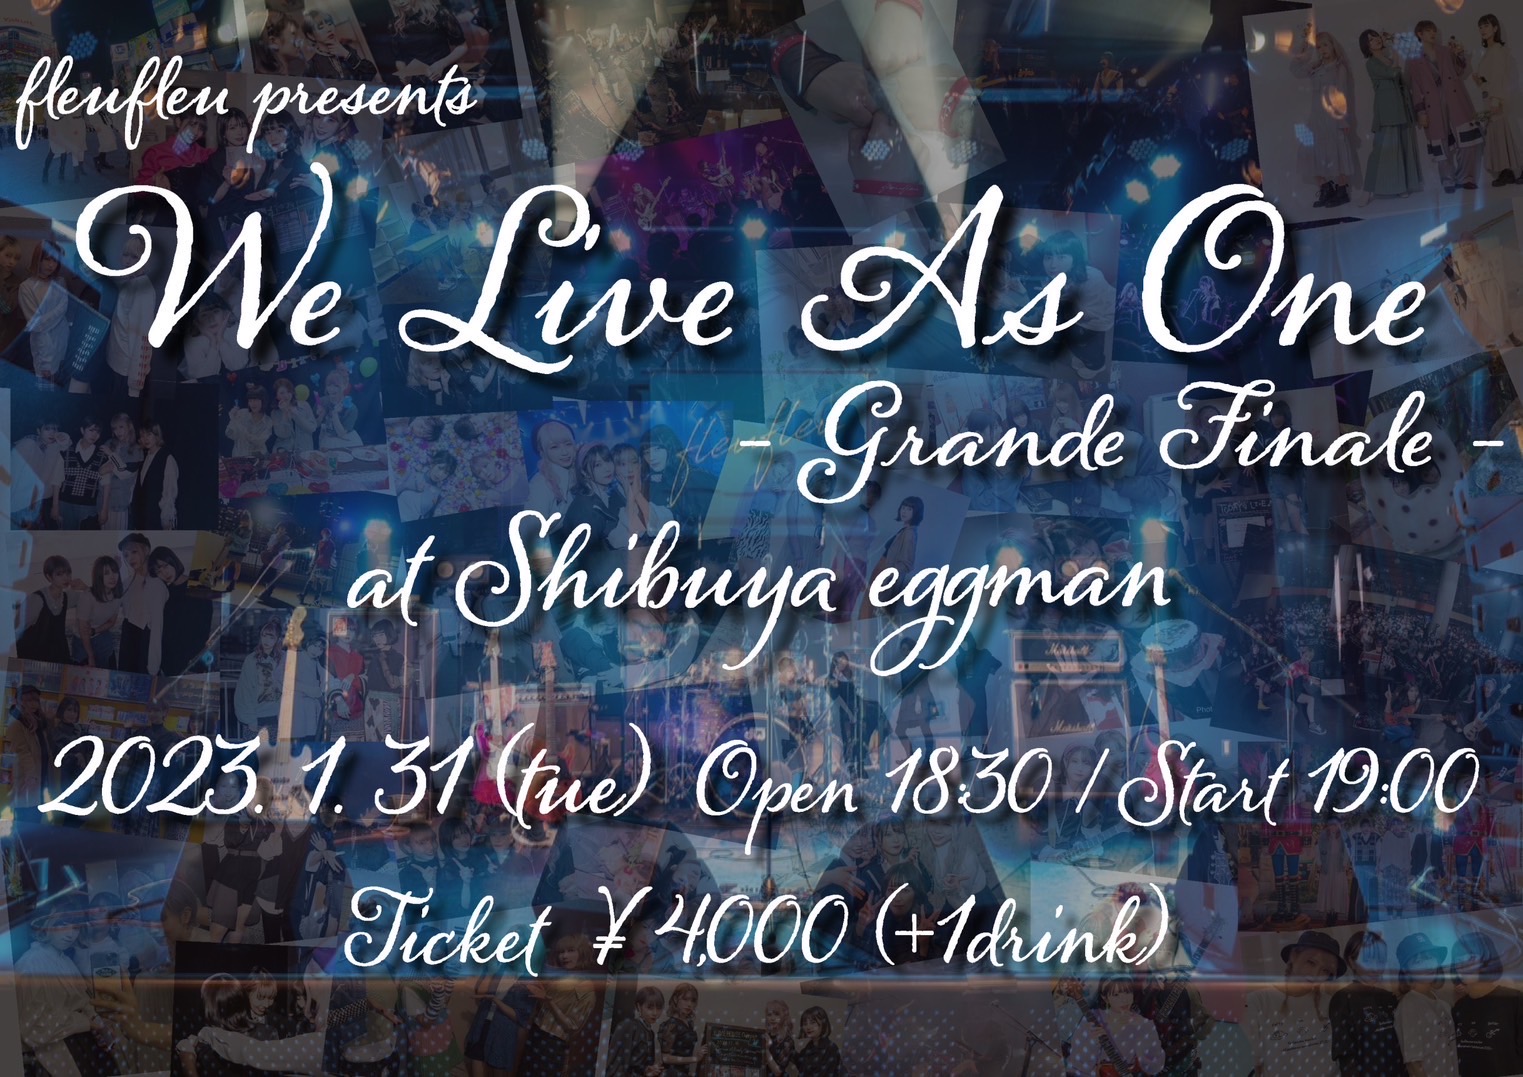 fleufleu Presents We Live As One -Grande finale-